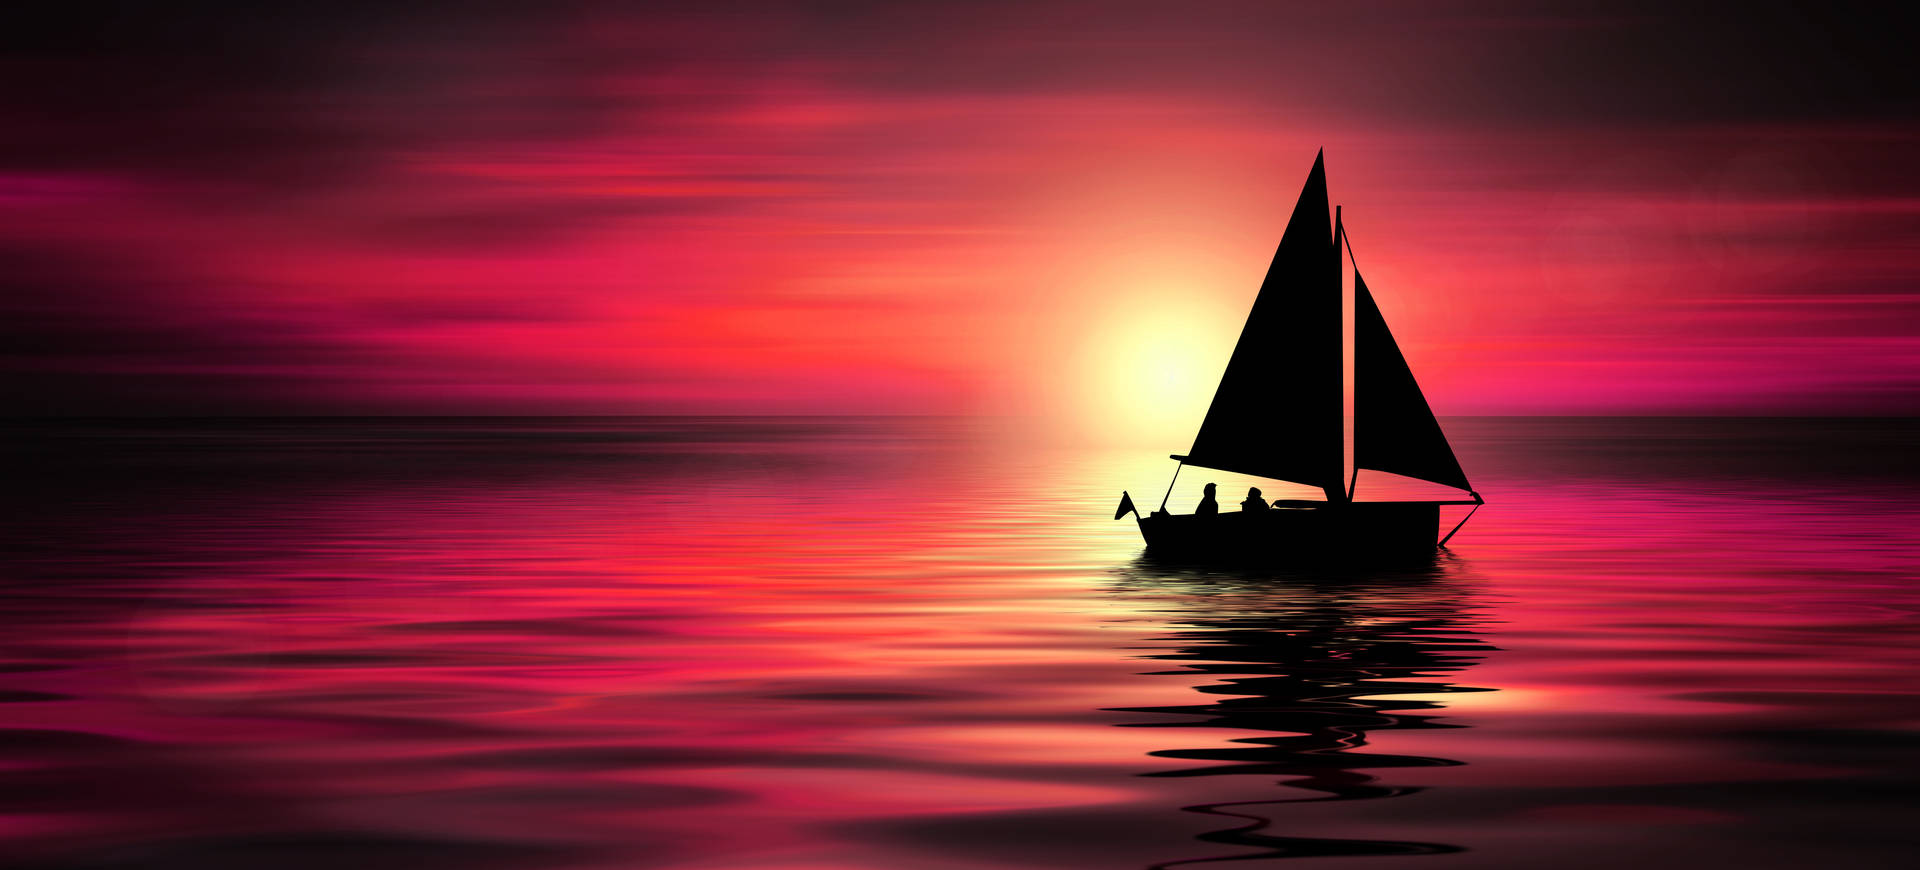 Sailing Against Pink Sunset Sky Wallpaper